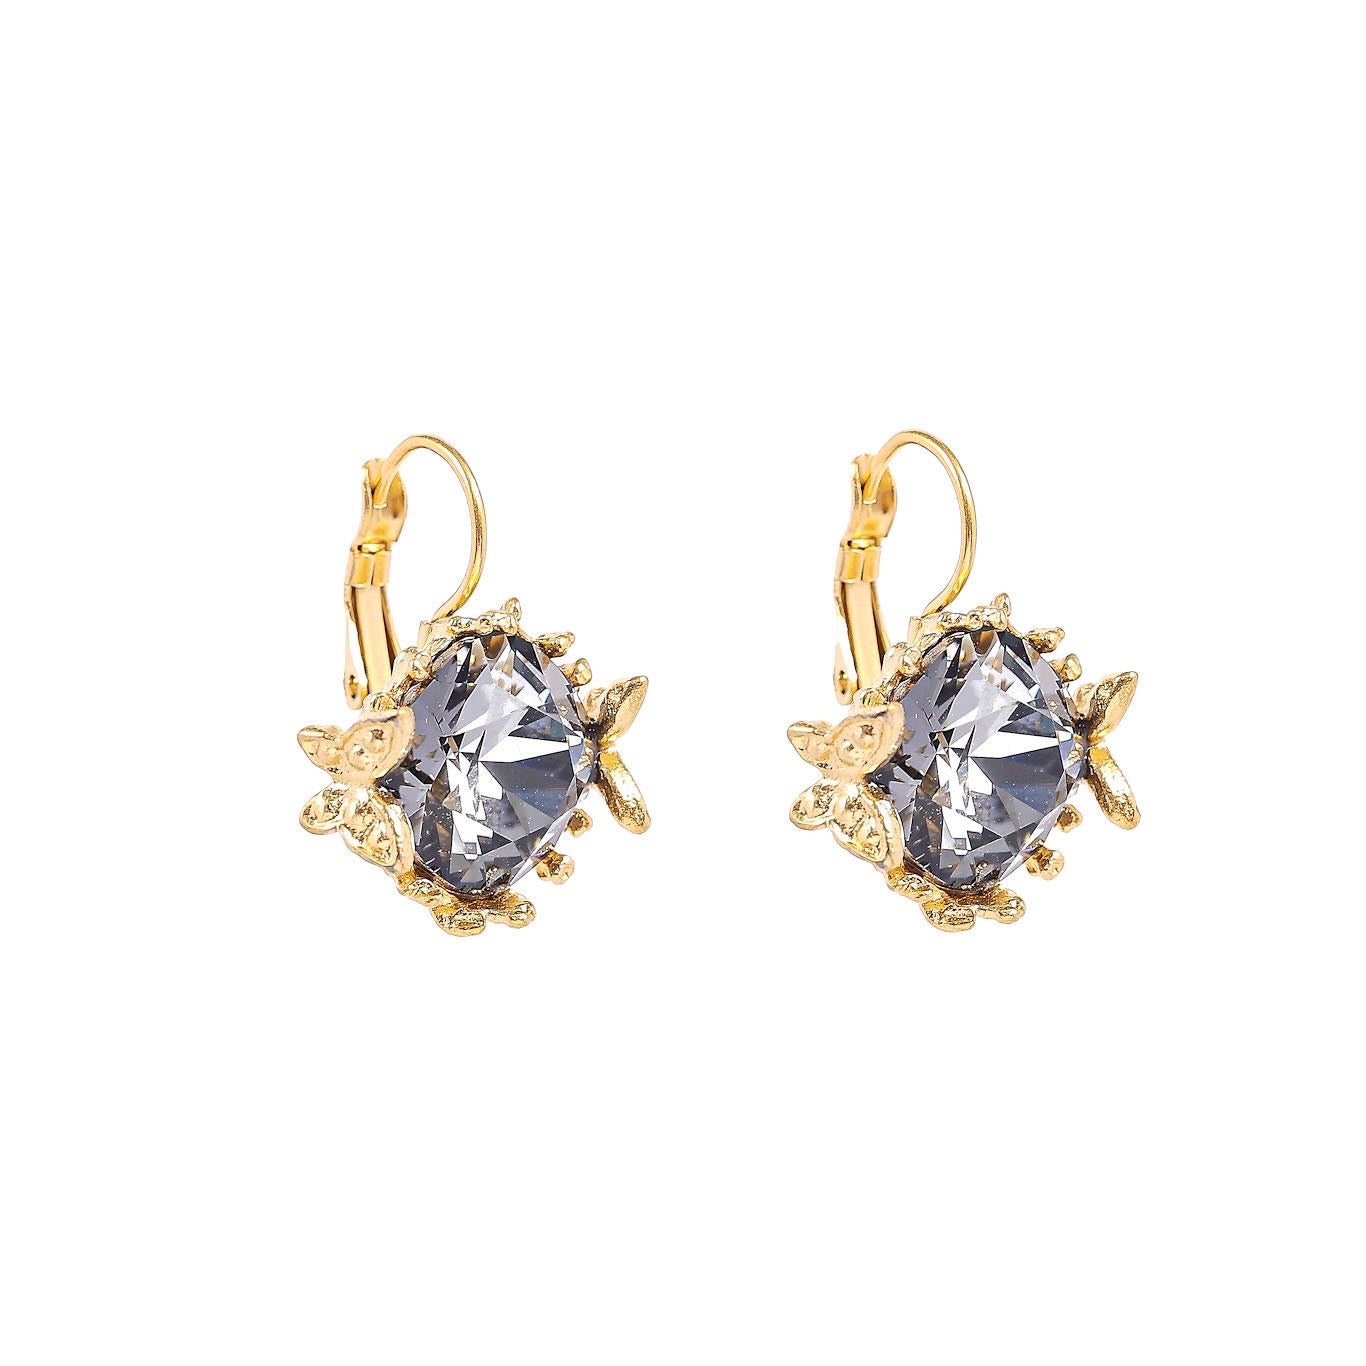 Ellie Swarovski earrings - Charcoal